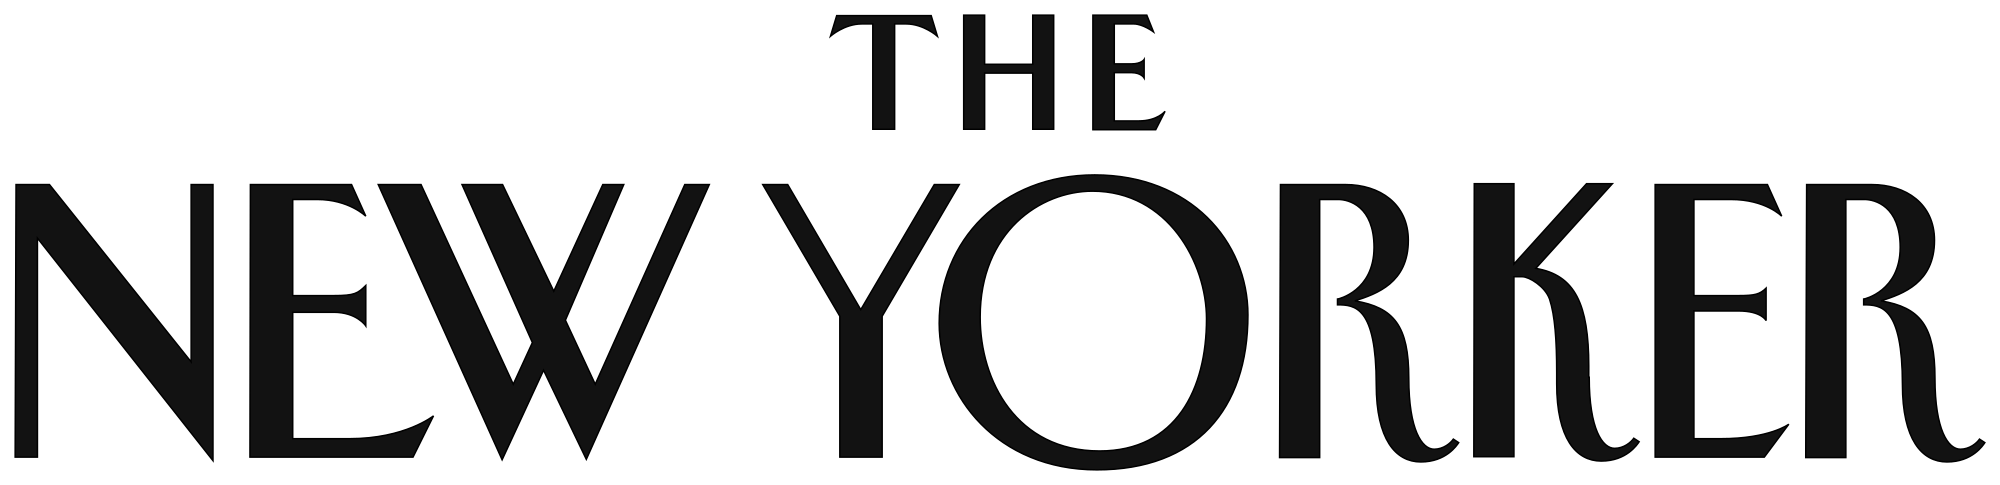 The New Yorker Studios Logo